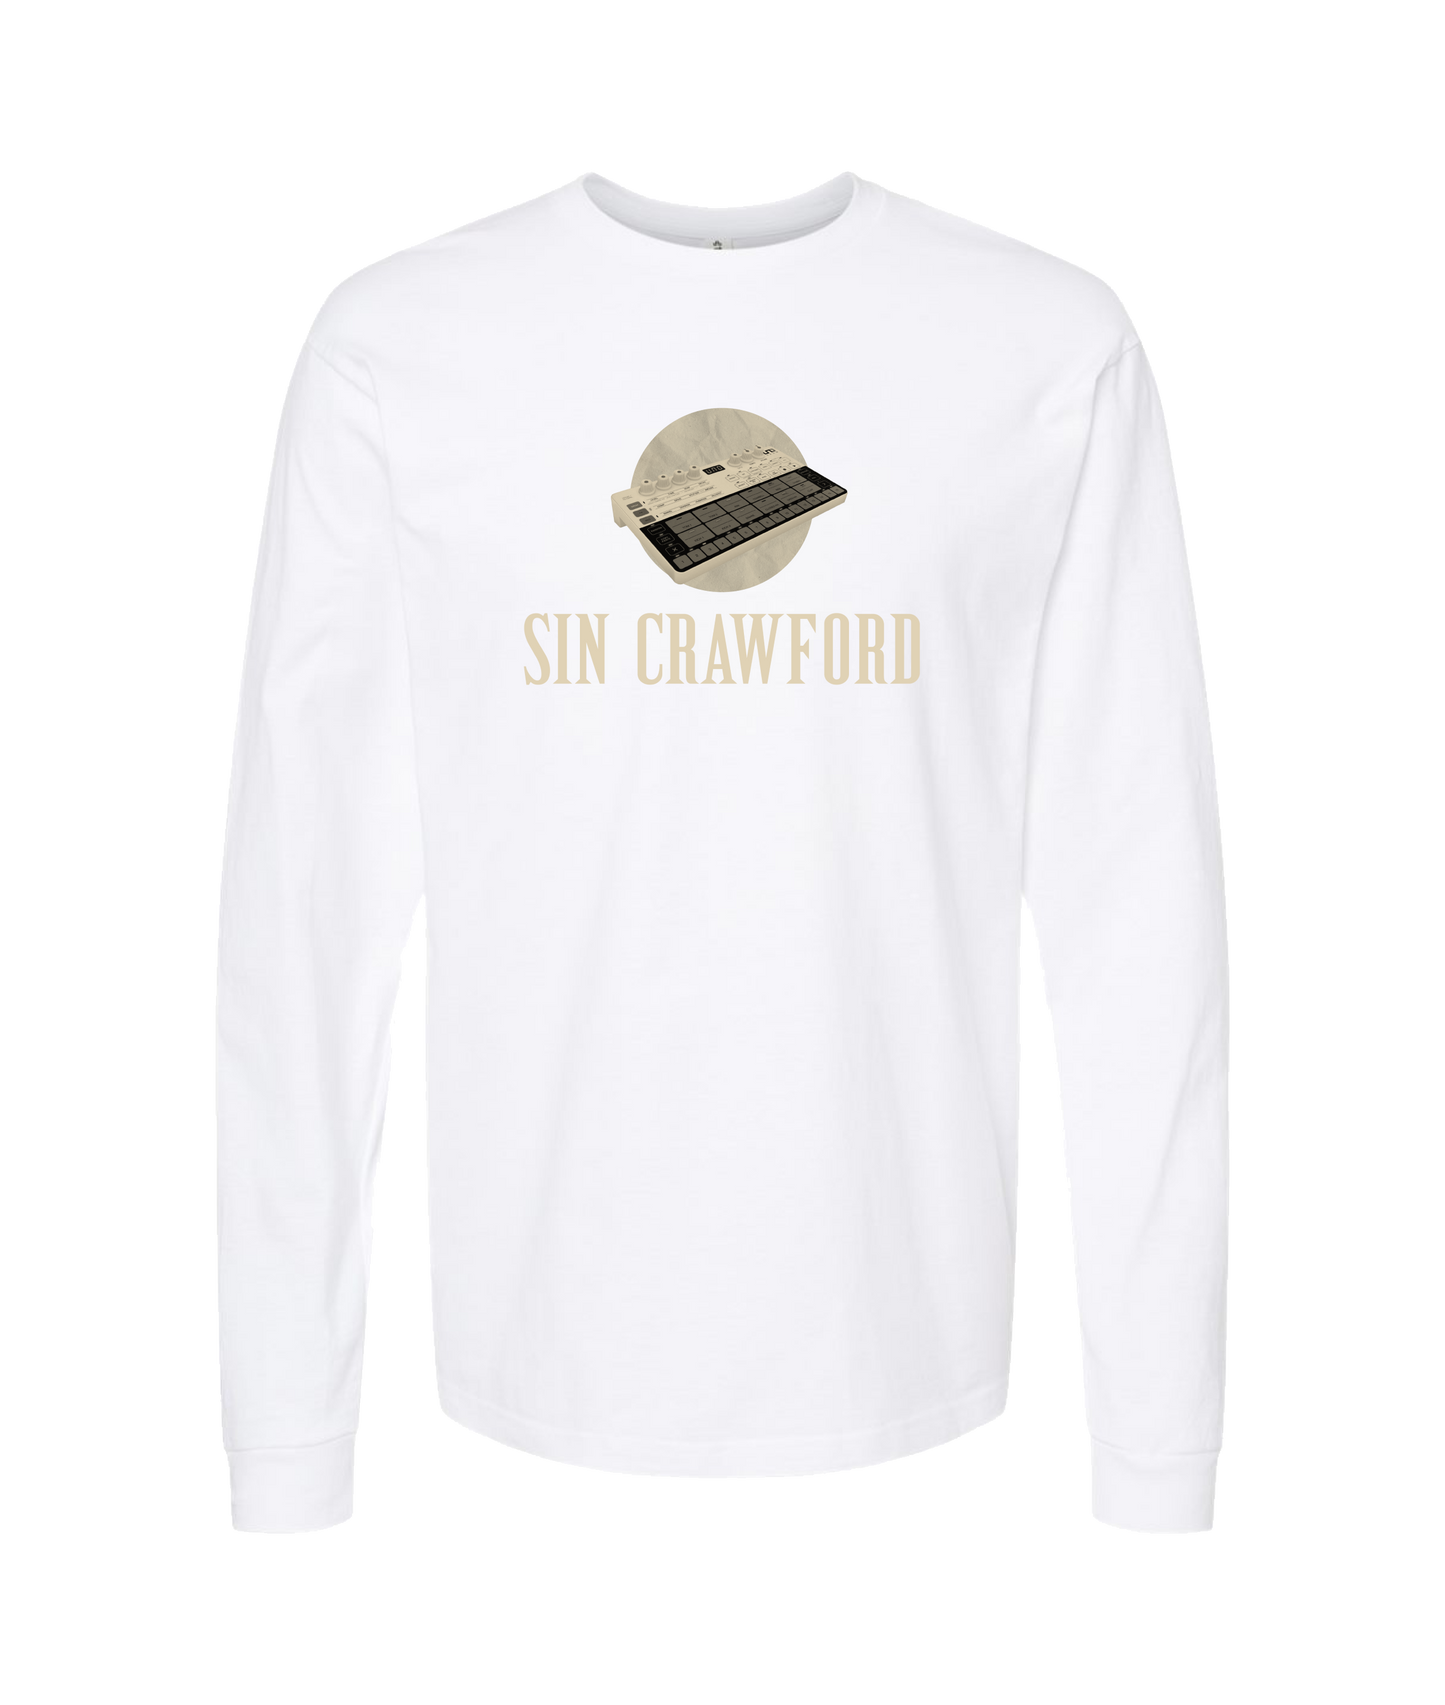 Sincrawford - Drum Machine - White Long Sleeve T